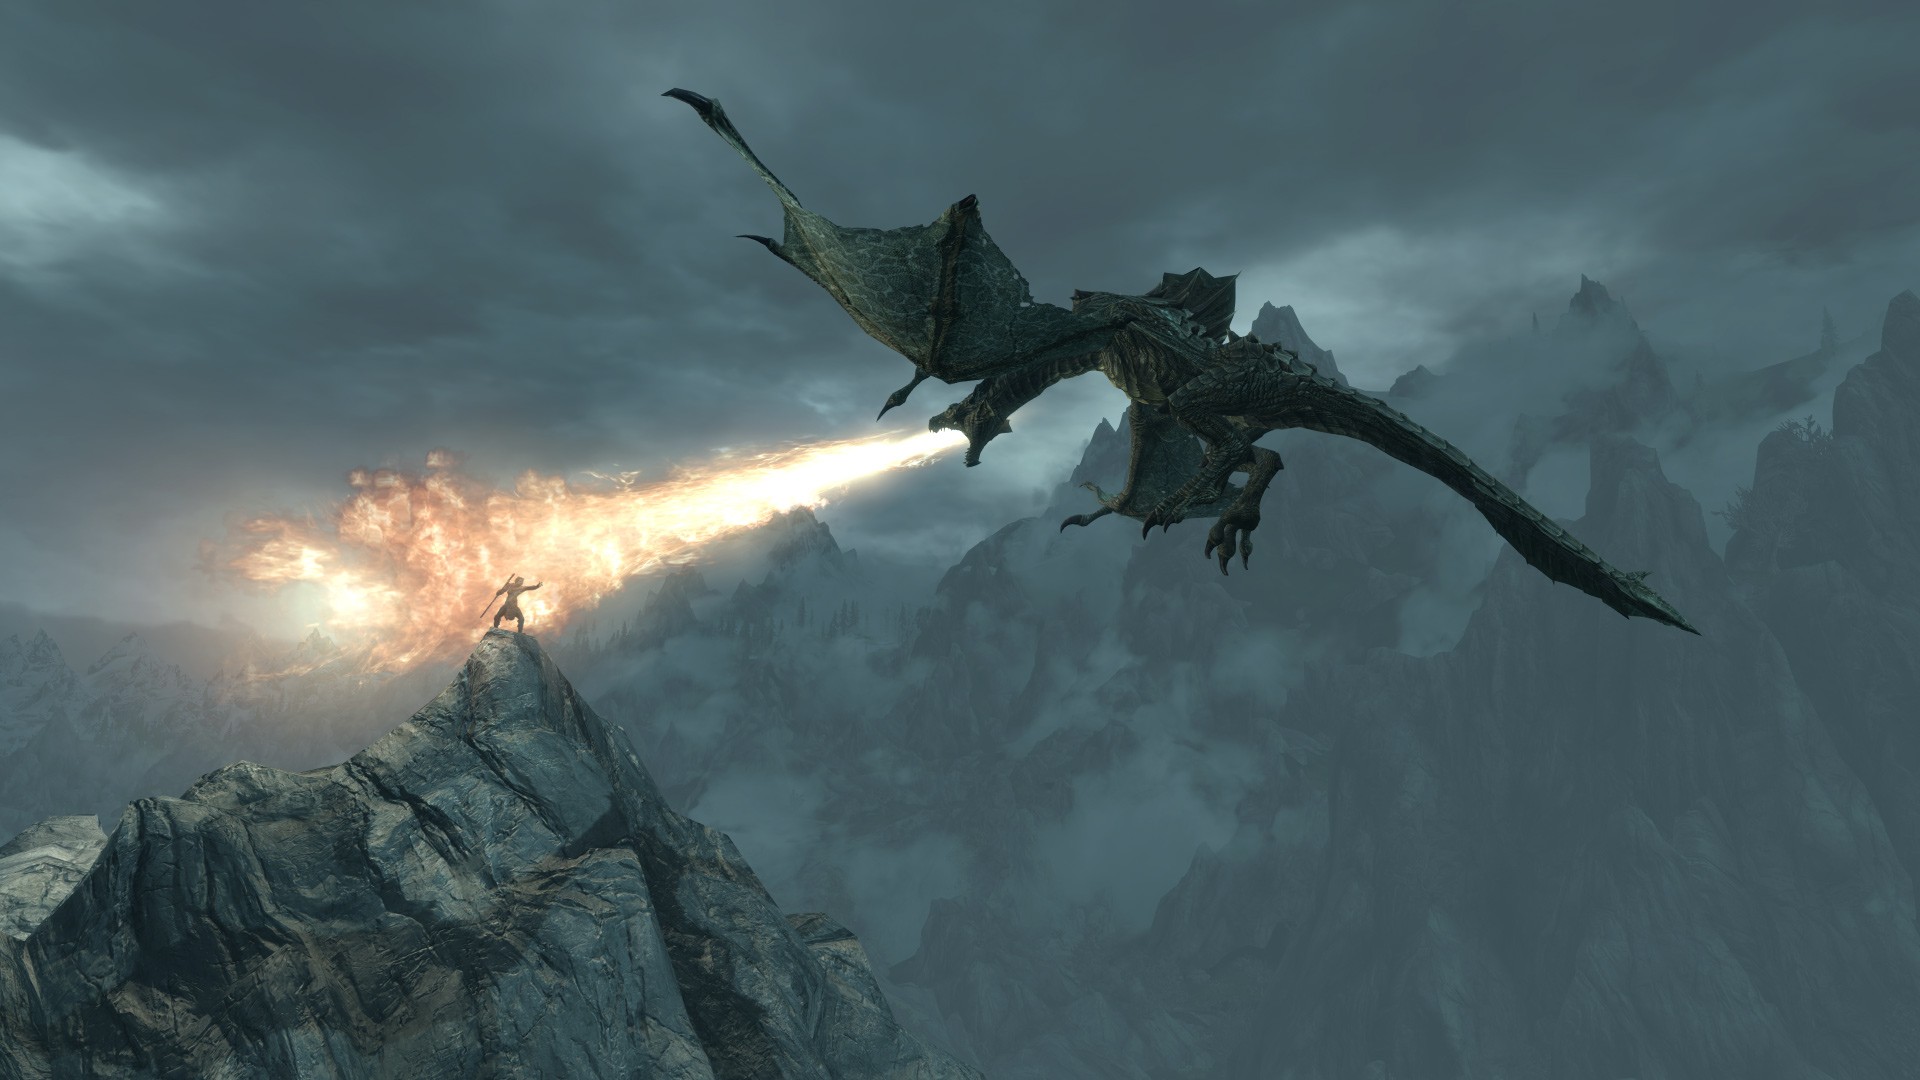 General 1920x1080 The Elder Scrolls V: Skyrim video games RPG PC gaming sky mountains dragon creature fire